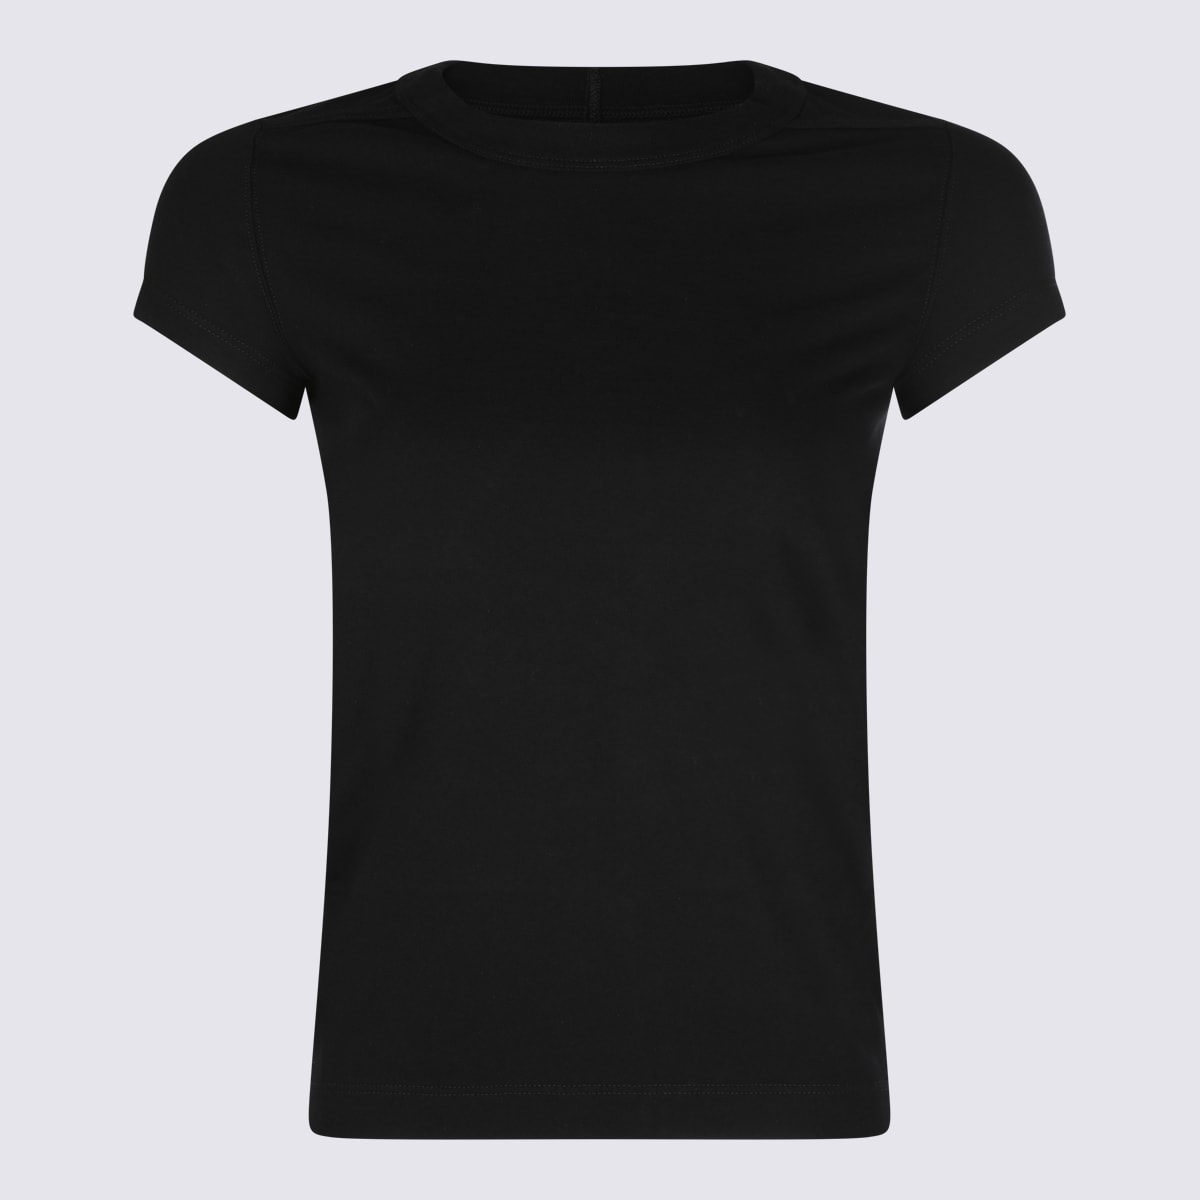 Rick Owens Black Cotton T-shirt